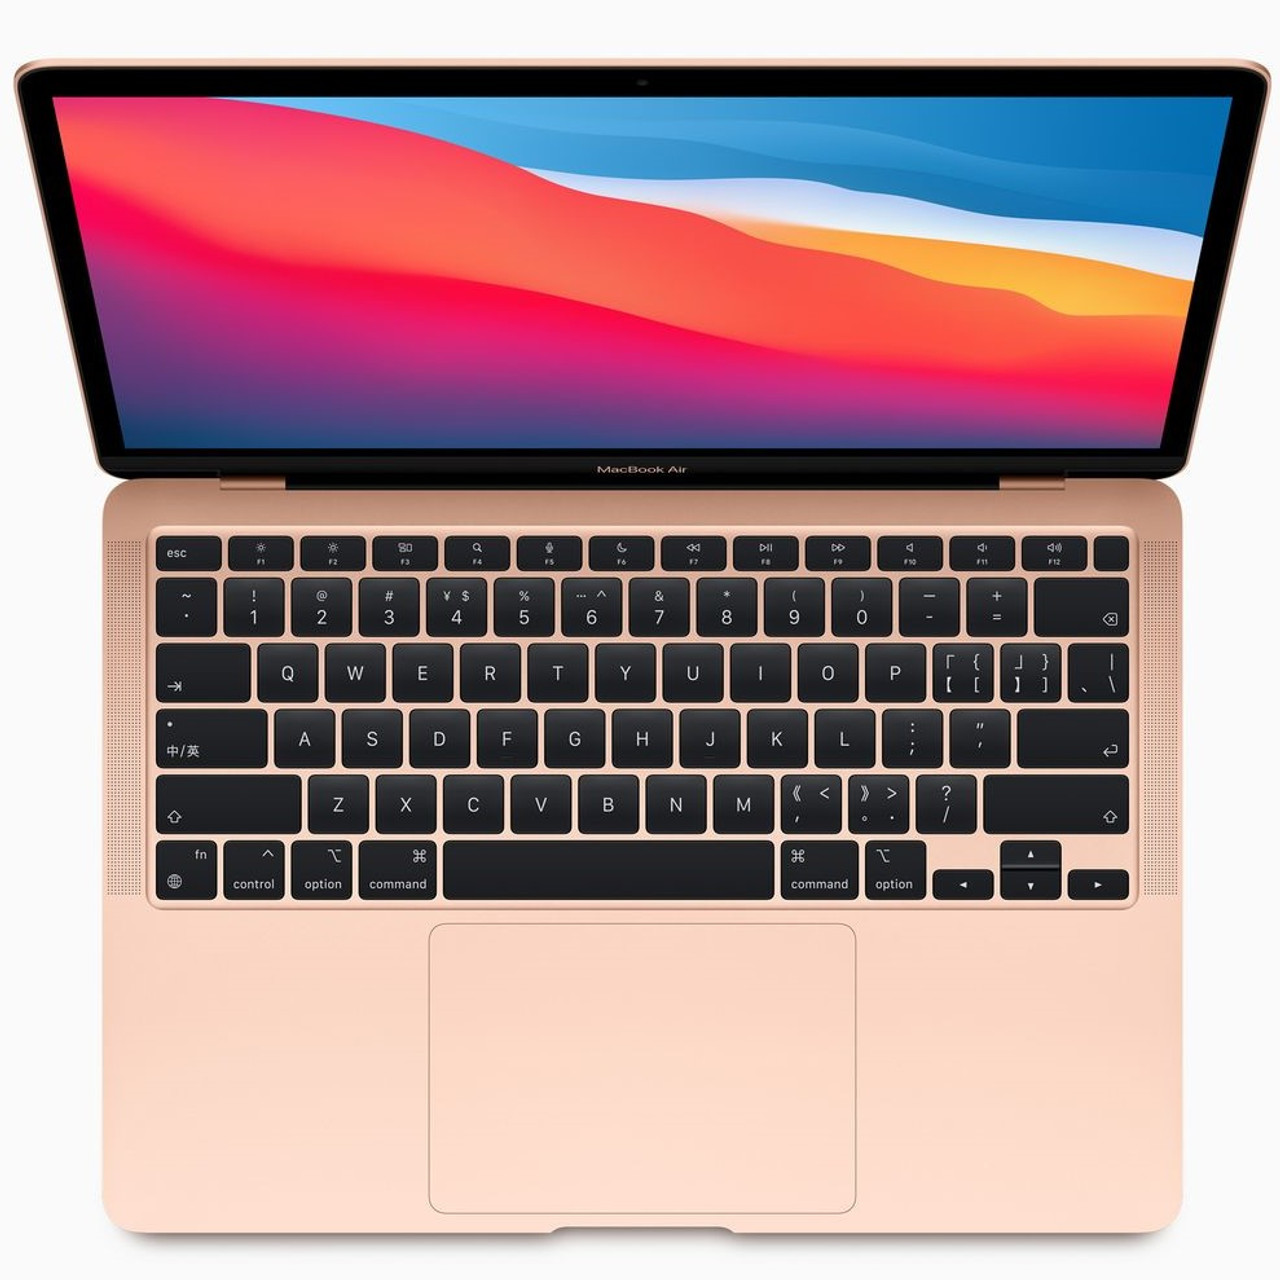 New - Apple MacBook Air 2020 Gold - Apple M1, 8GB RAM, 256GB SSD